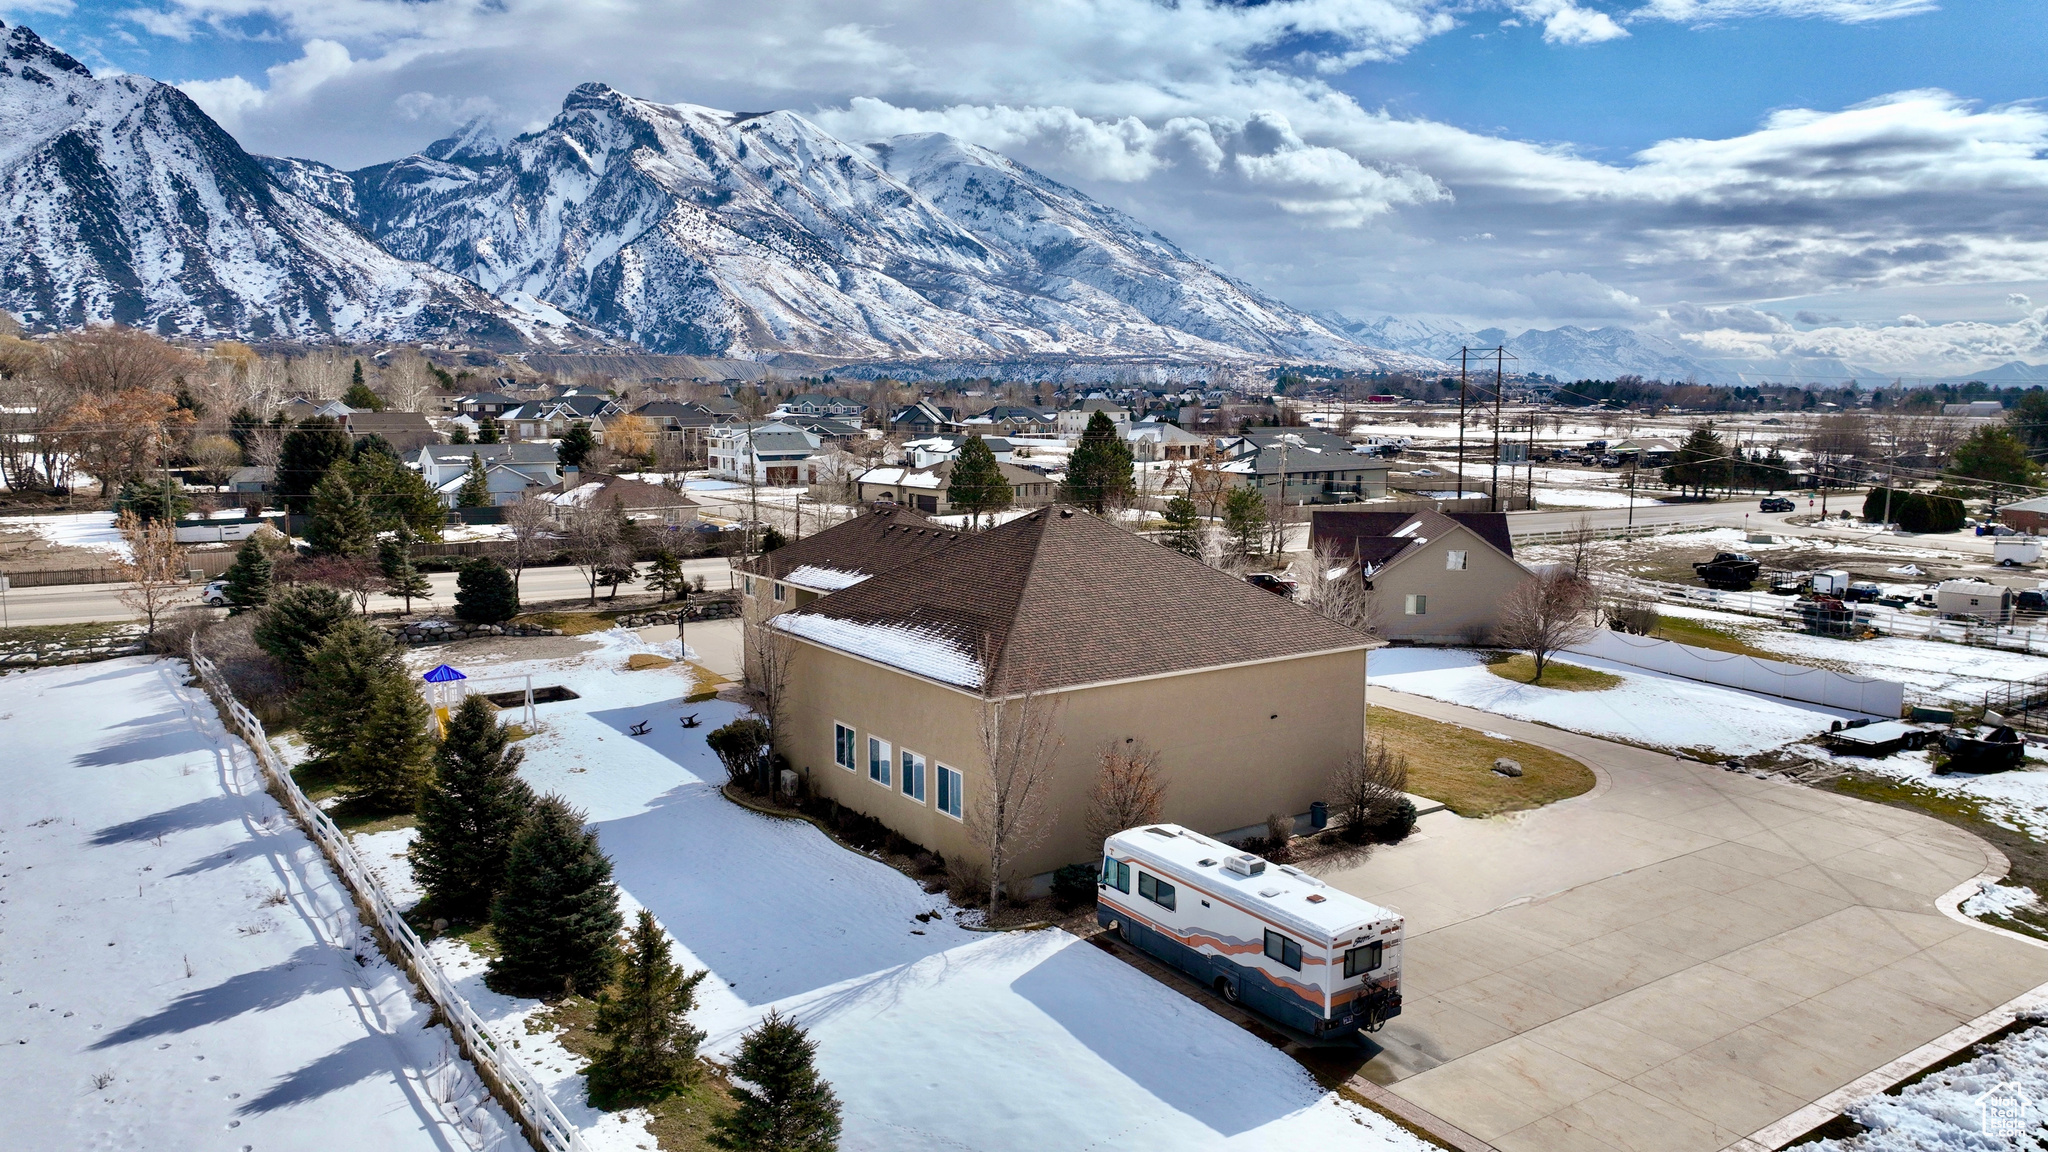 702 S ALPINE, Alpine, Utah 84004, 5 Bedrooms Bedrooms, 13 Rooms Rooms,2 BathroomsBathrooms,Residential,For sale,ALPINE,1992091